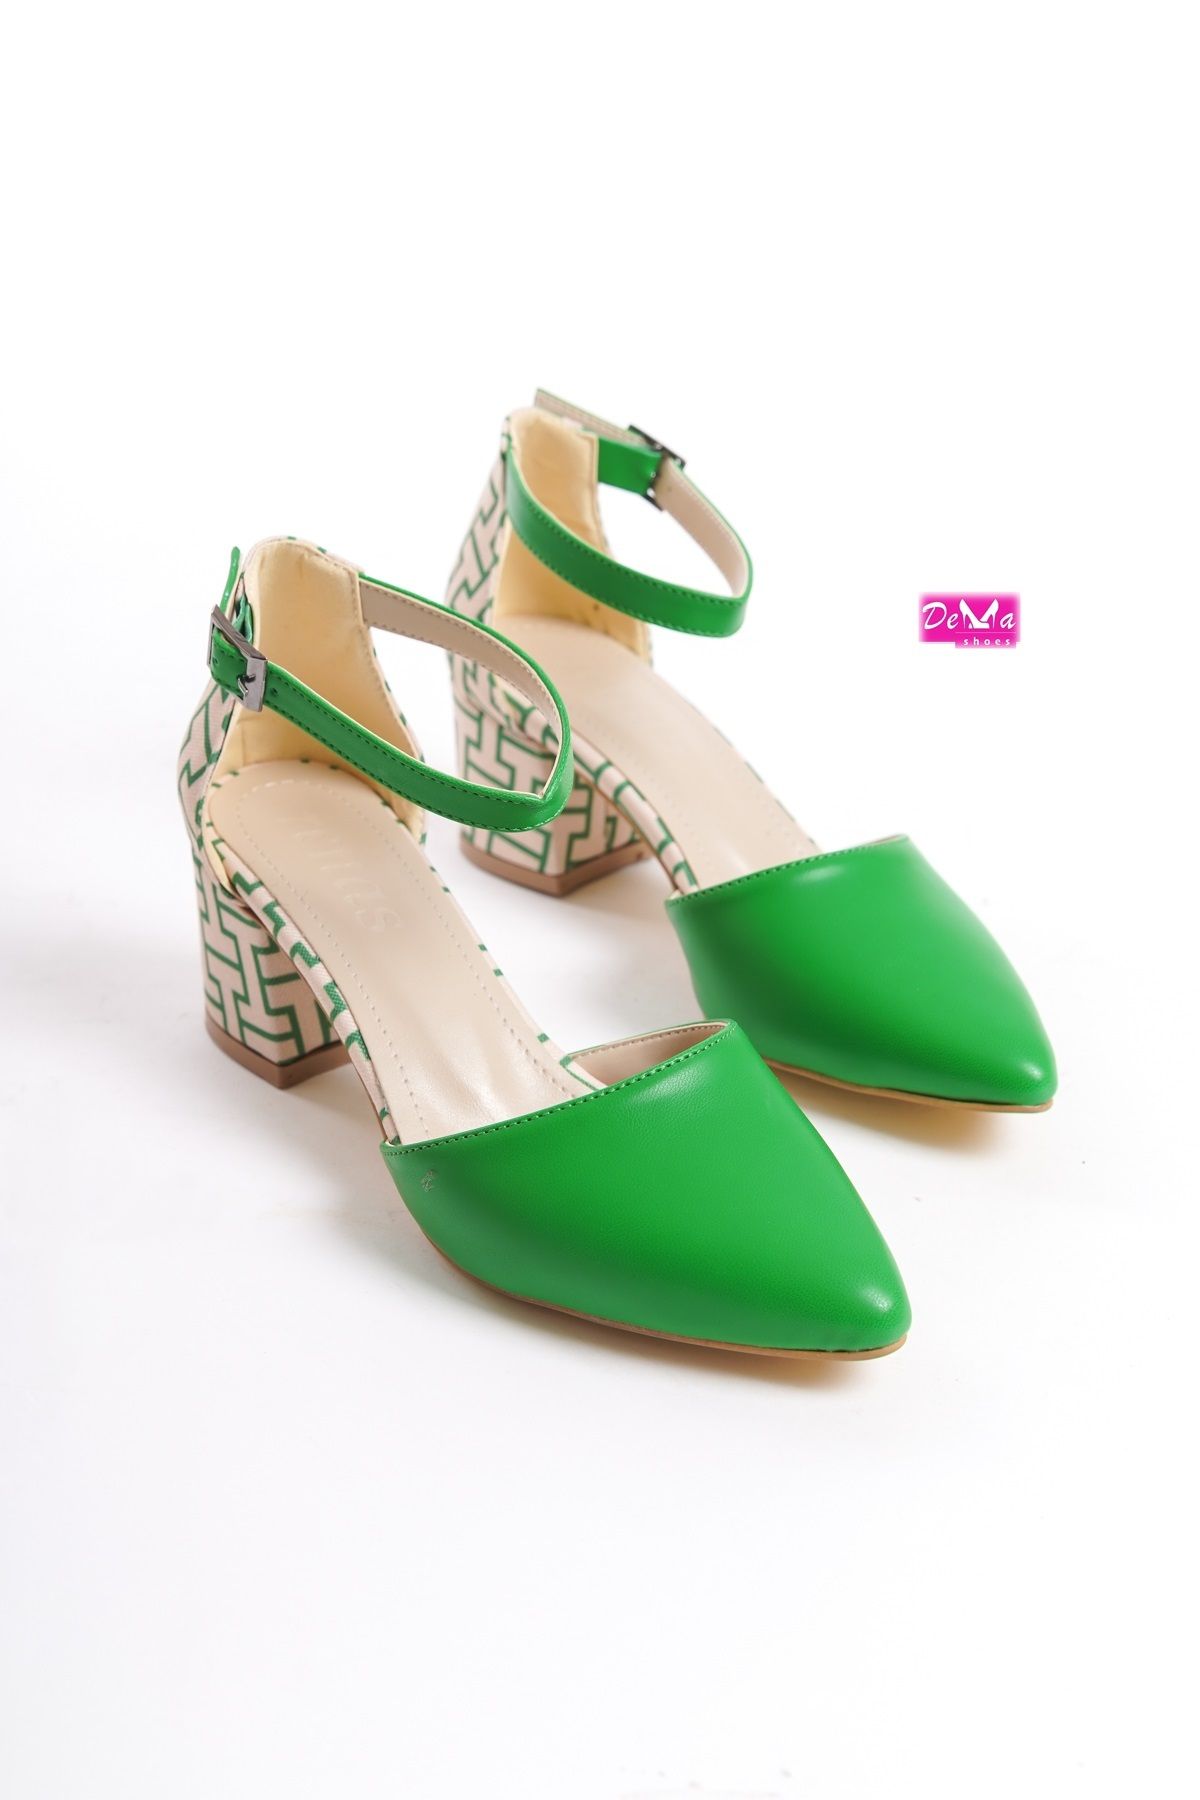 Demashoes Yeşil  Yeni Sezon Topuklu Ayakkabı Topuk 5 cm dir